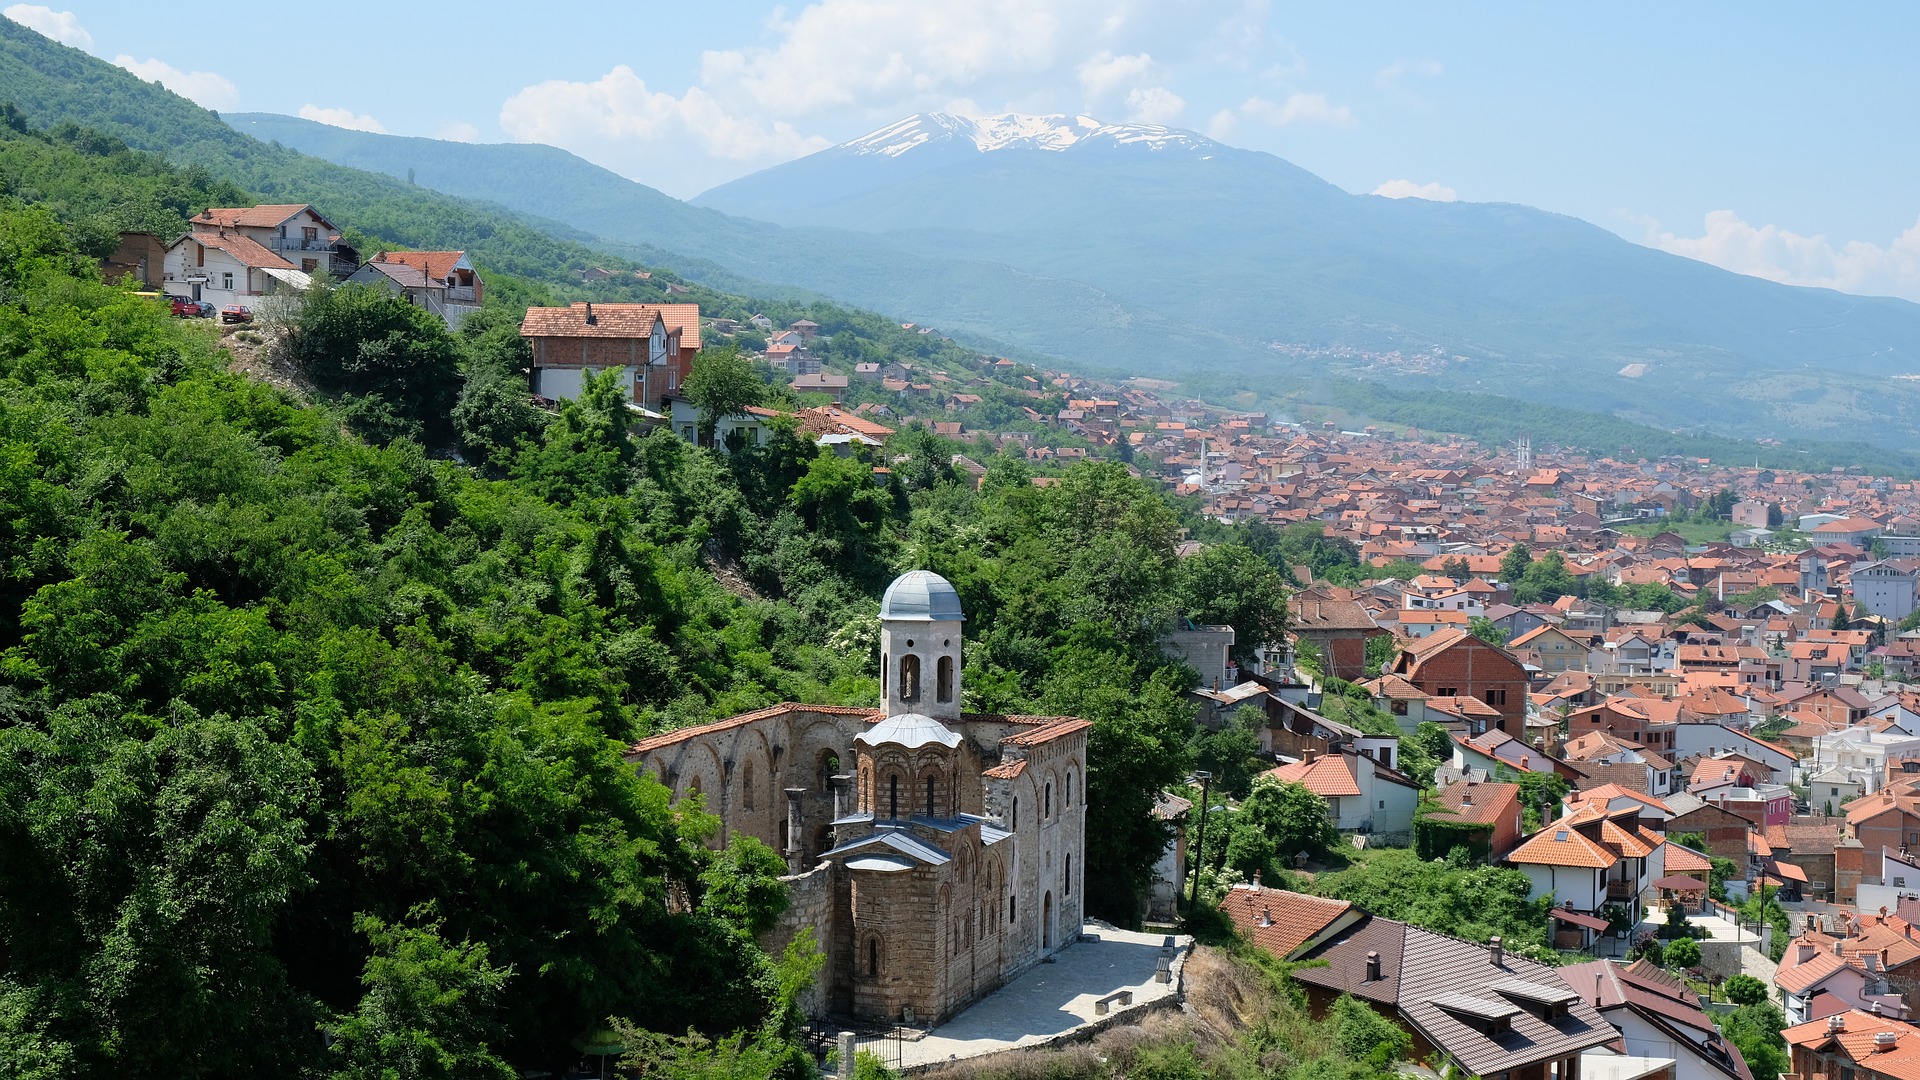 Prizren in Kosovo. Beautiful mountain hills